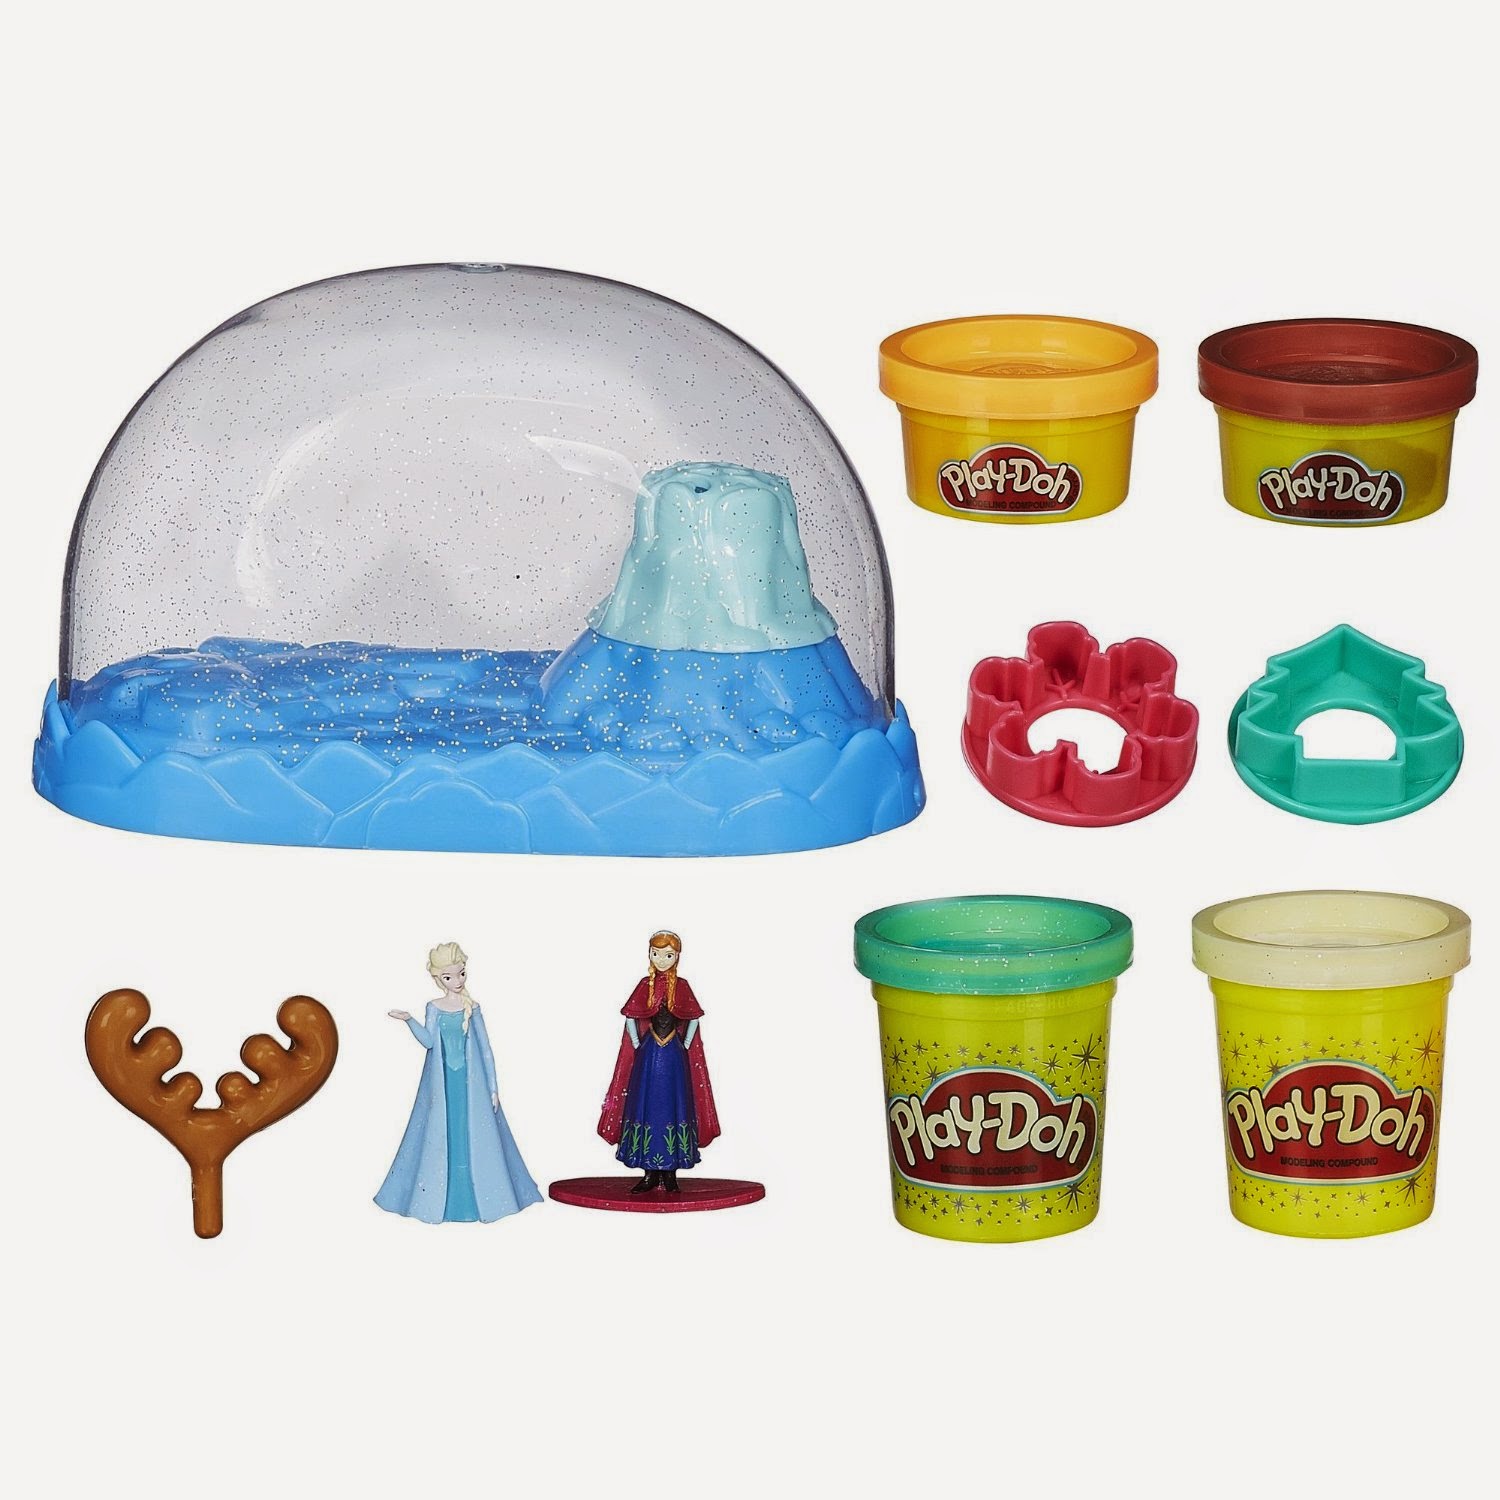 Disney Frozen Sparkle Snow Dome Set with Elsa and Anna